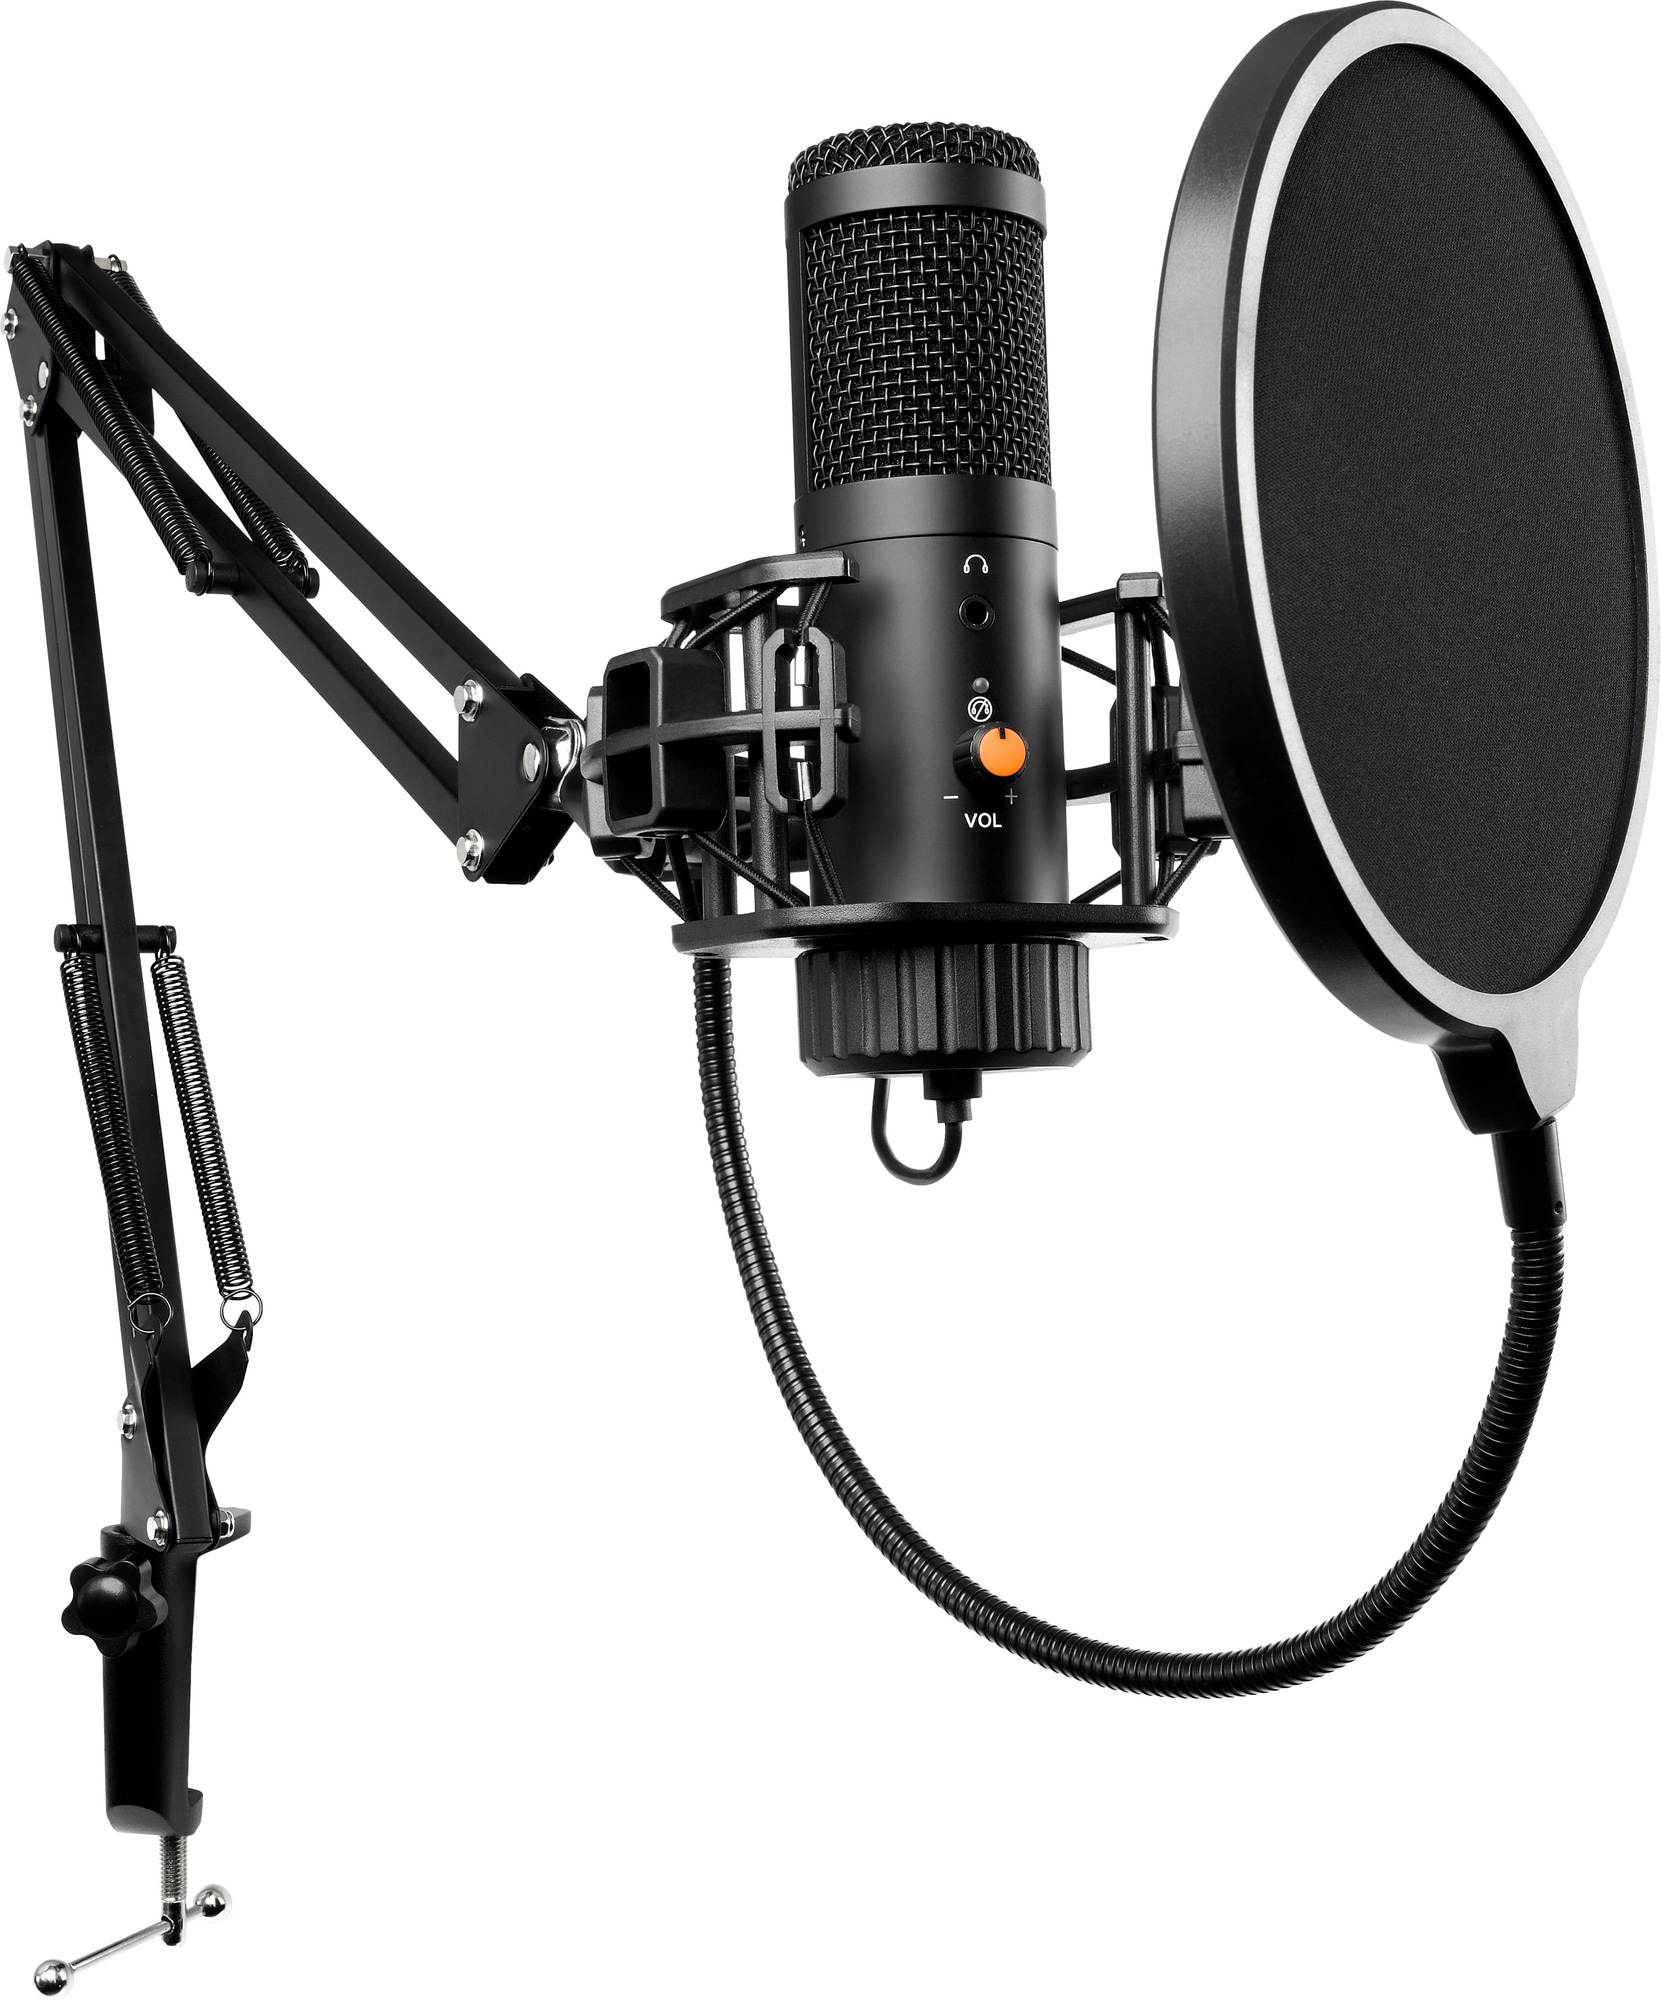 NOS X500 gamingmikrofon med bomset - Elgiganten